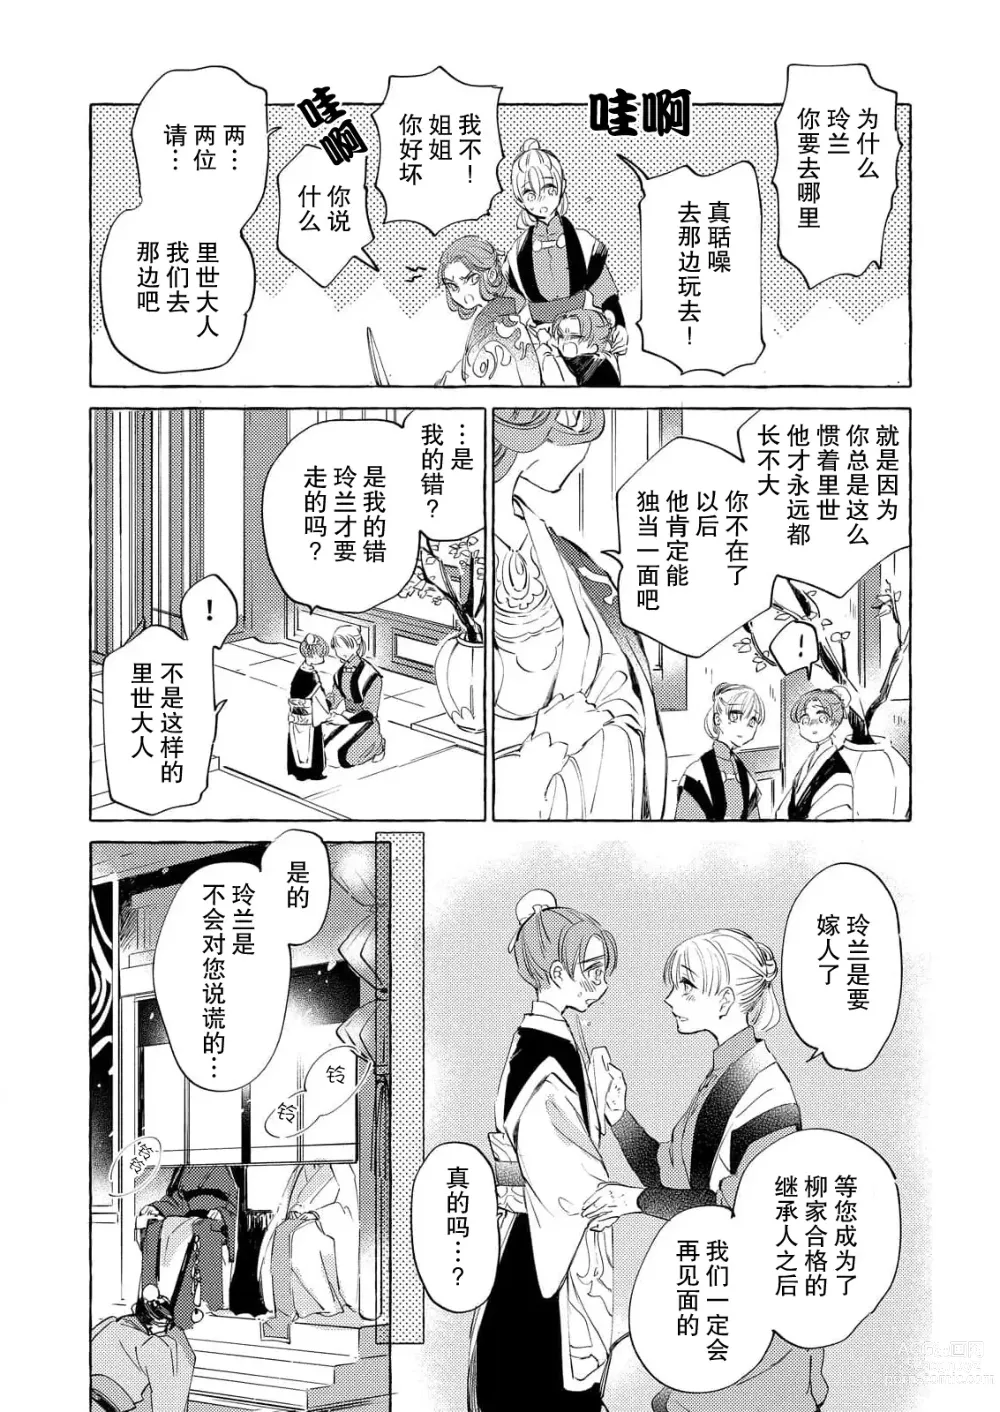 Page 8 of manga 无限宠爱新娘替嫁~冷酷皇子今夜也宠溺入骨~ 1-2 end